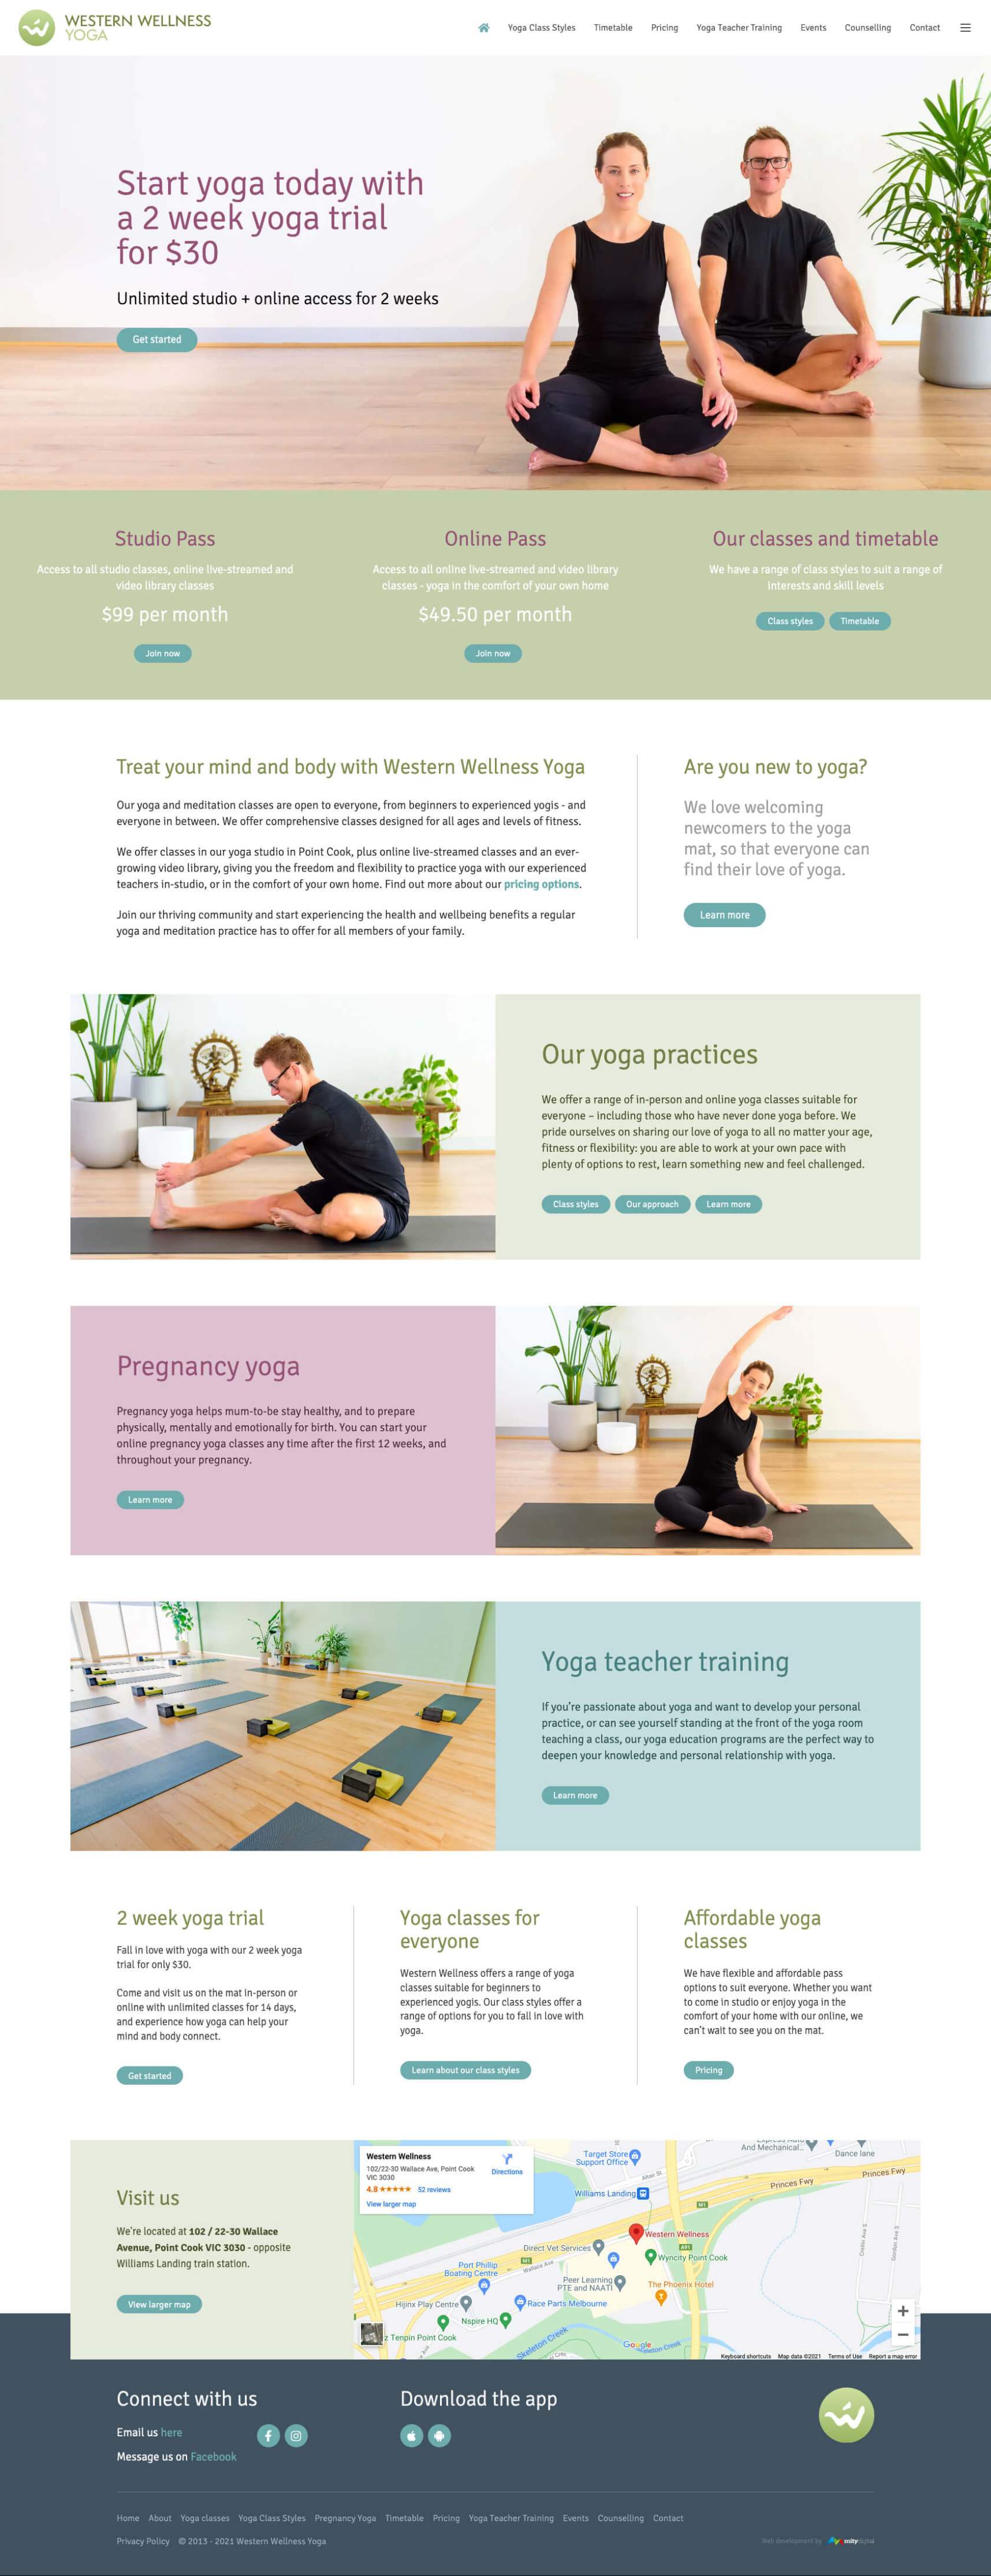 Western Wellness Yoga home page